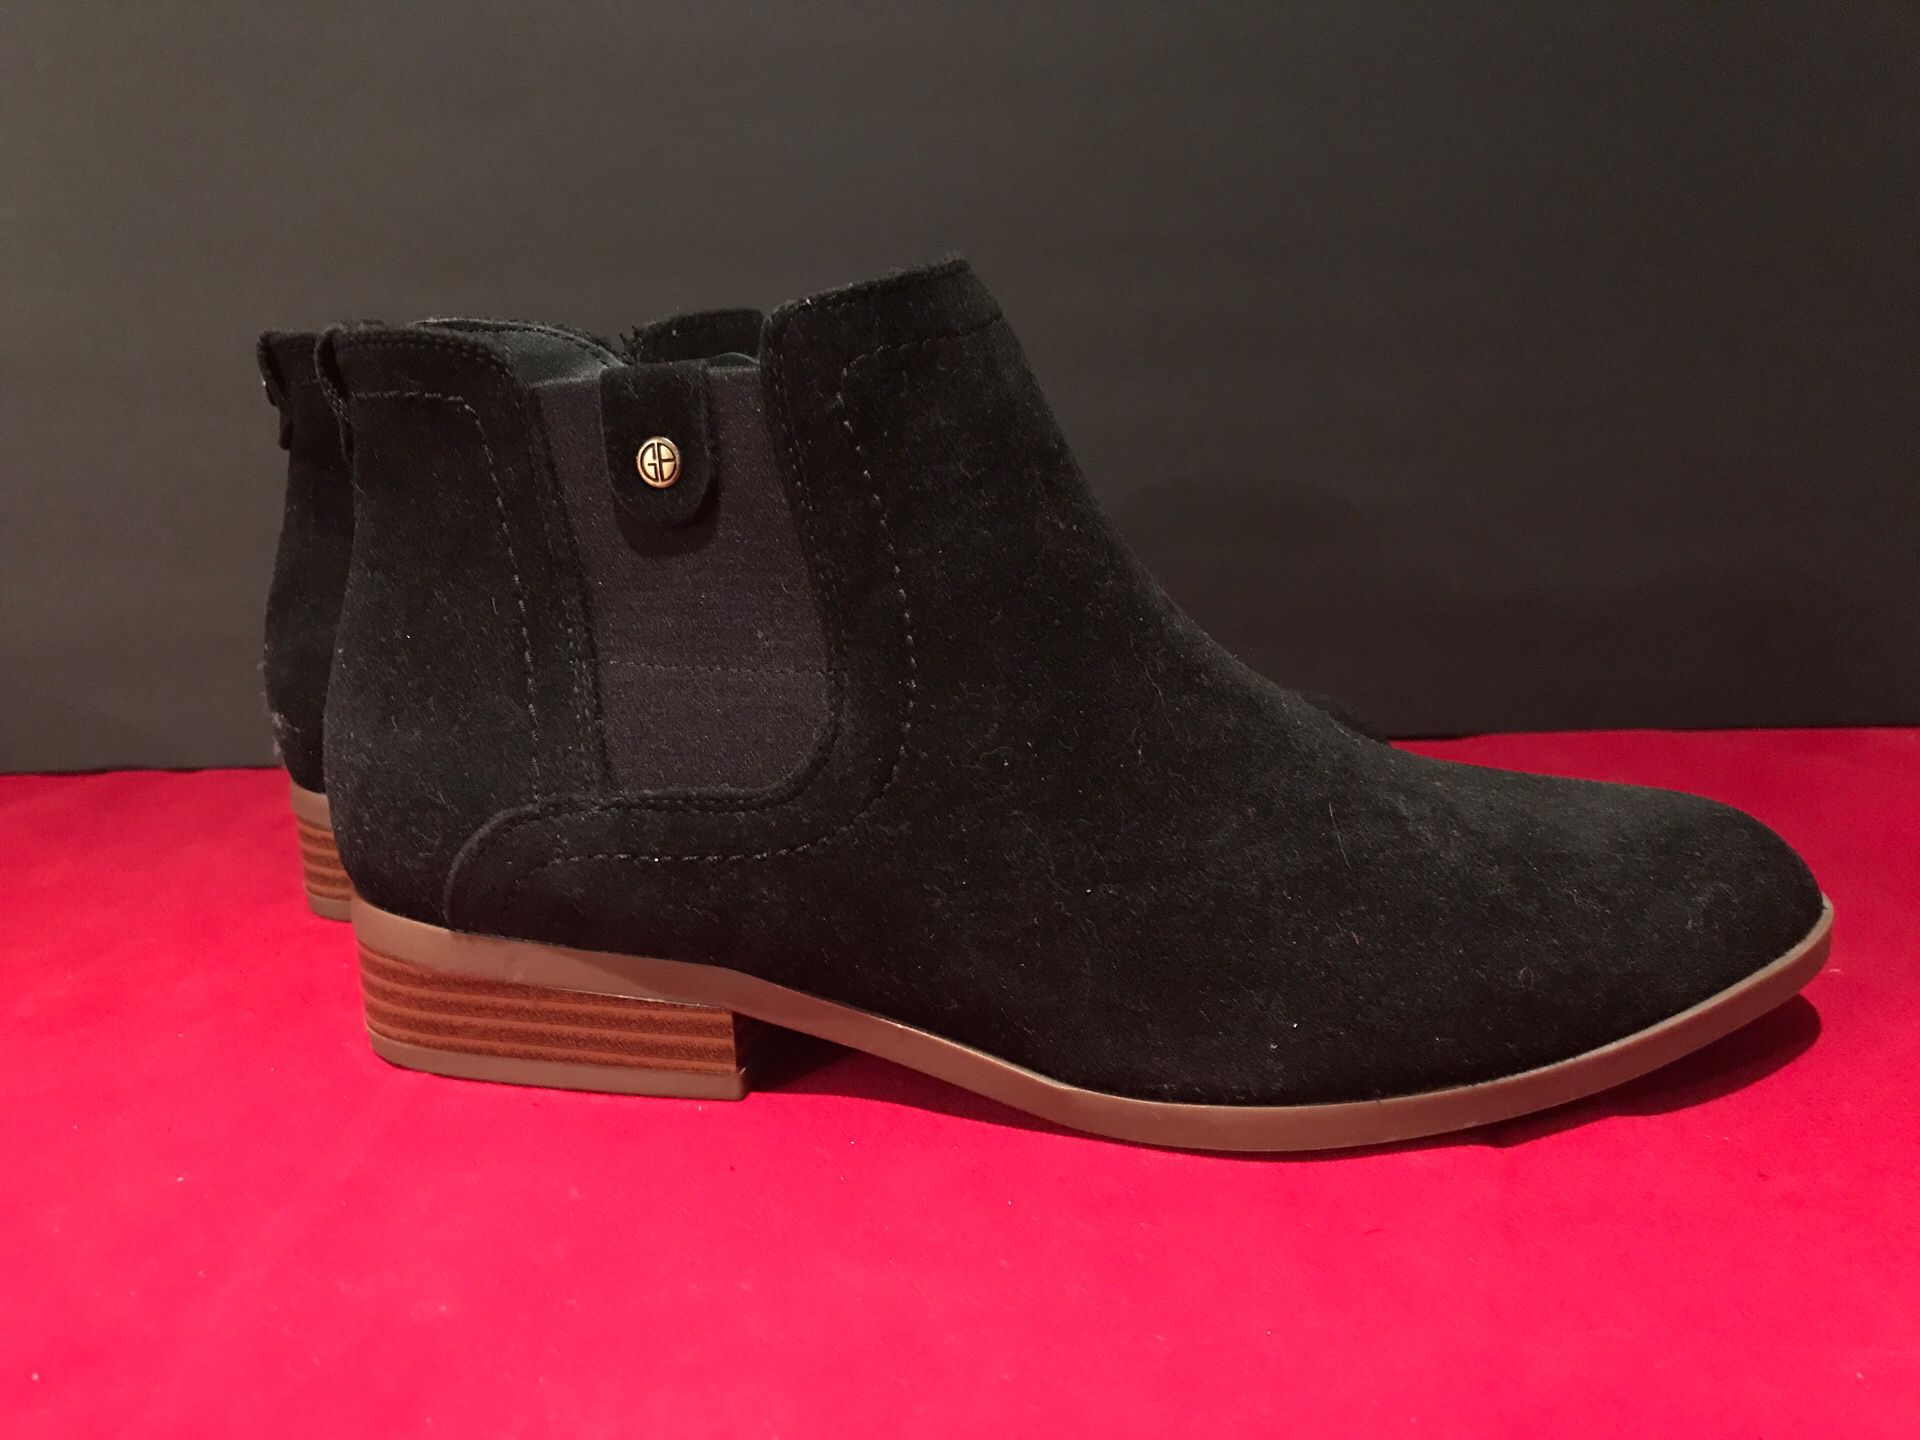 New Giani Bernini Women’s Ankle Boots Size 7